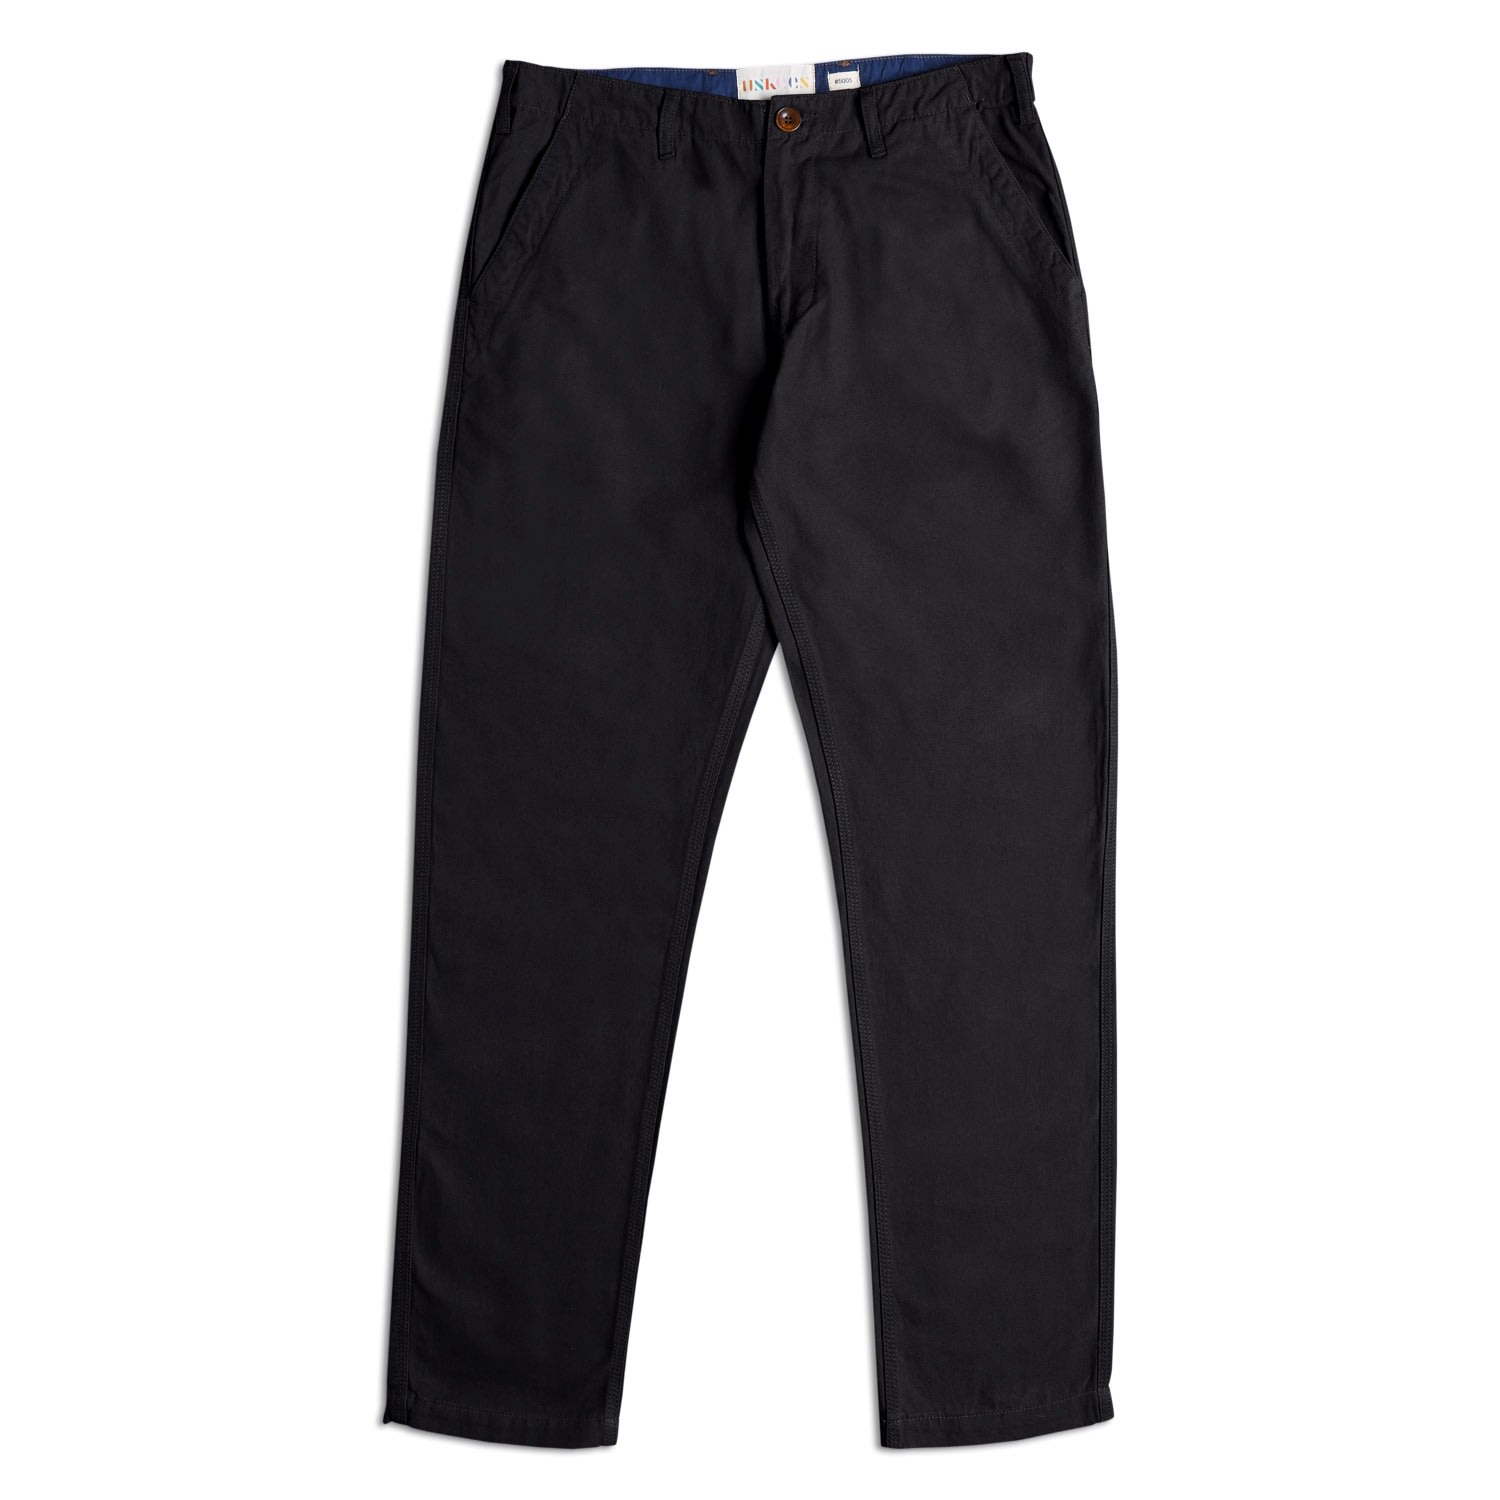 Uskees Men's The 5005 Workwear Pants - Black